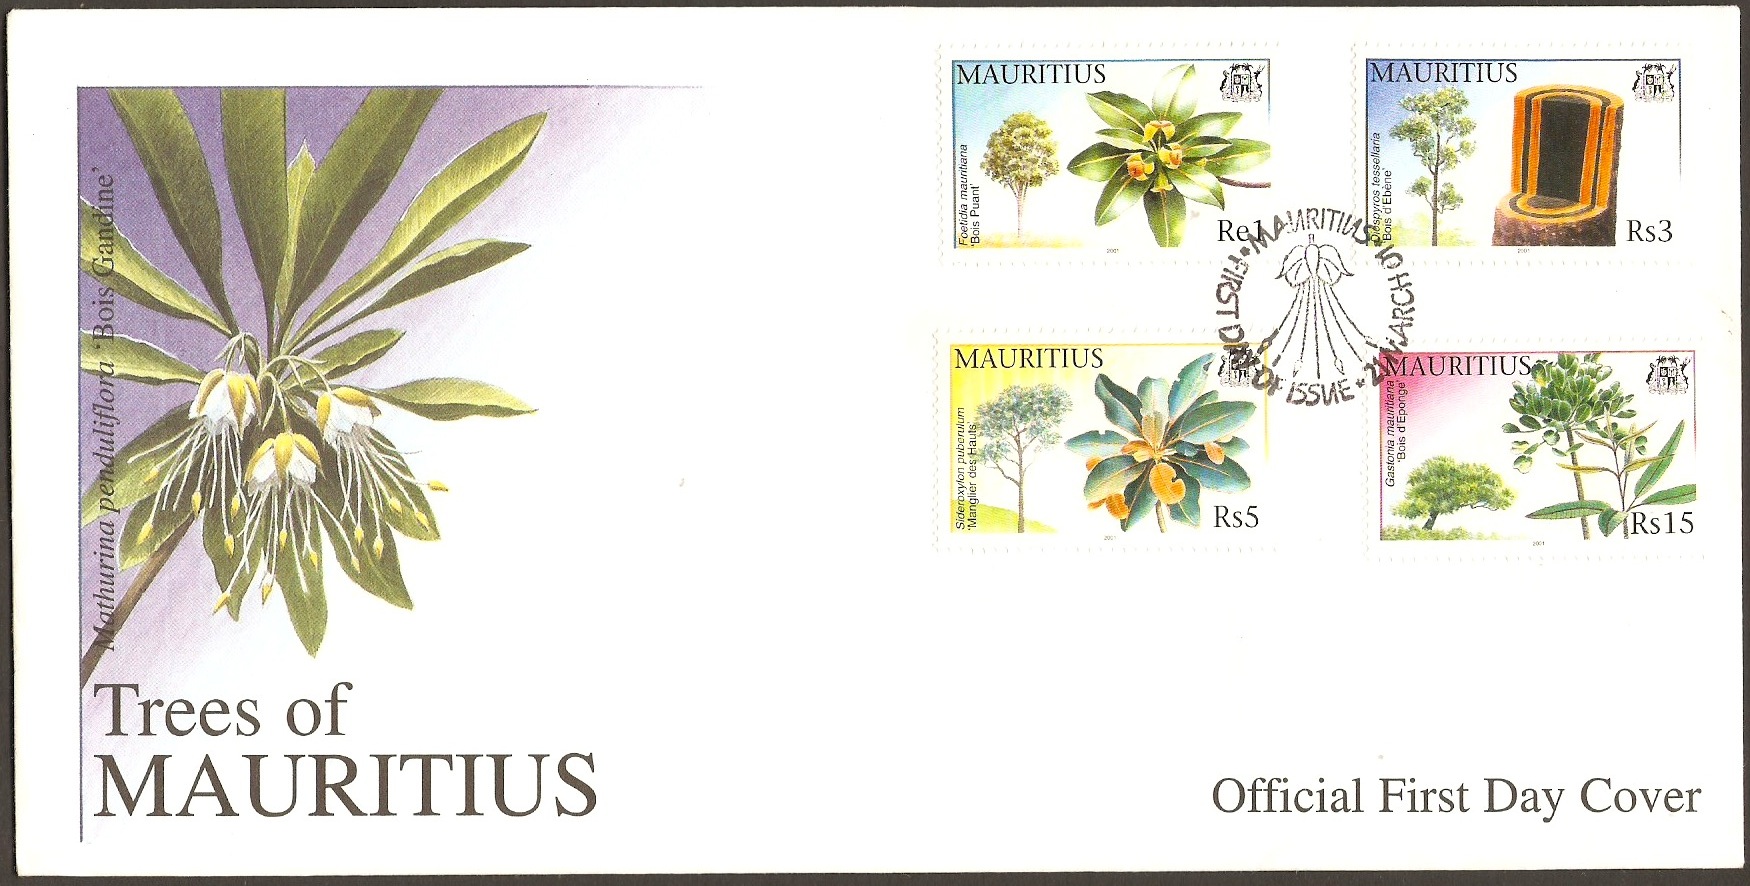 Mauritius 2001 Trees Series FDC.